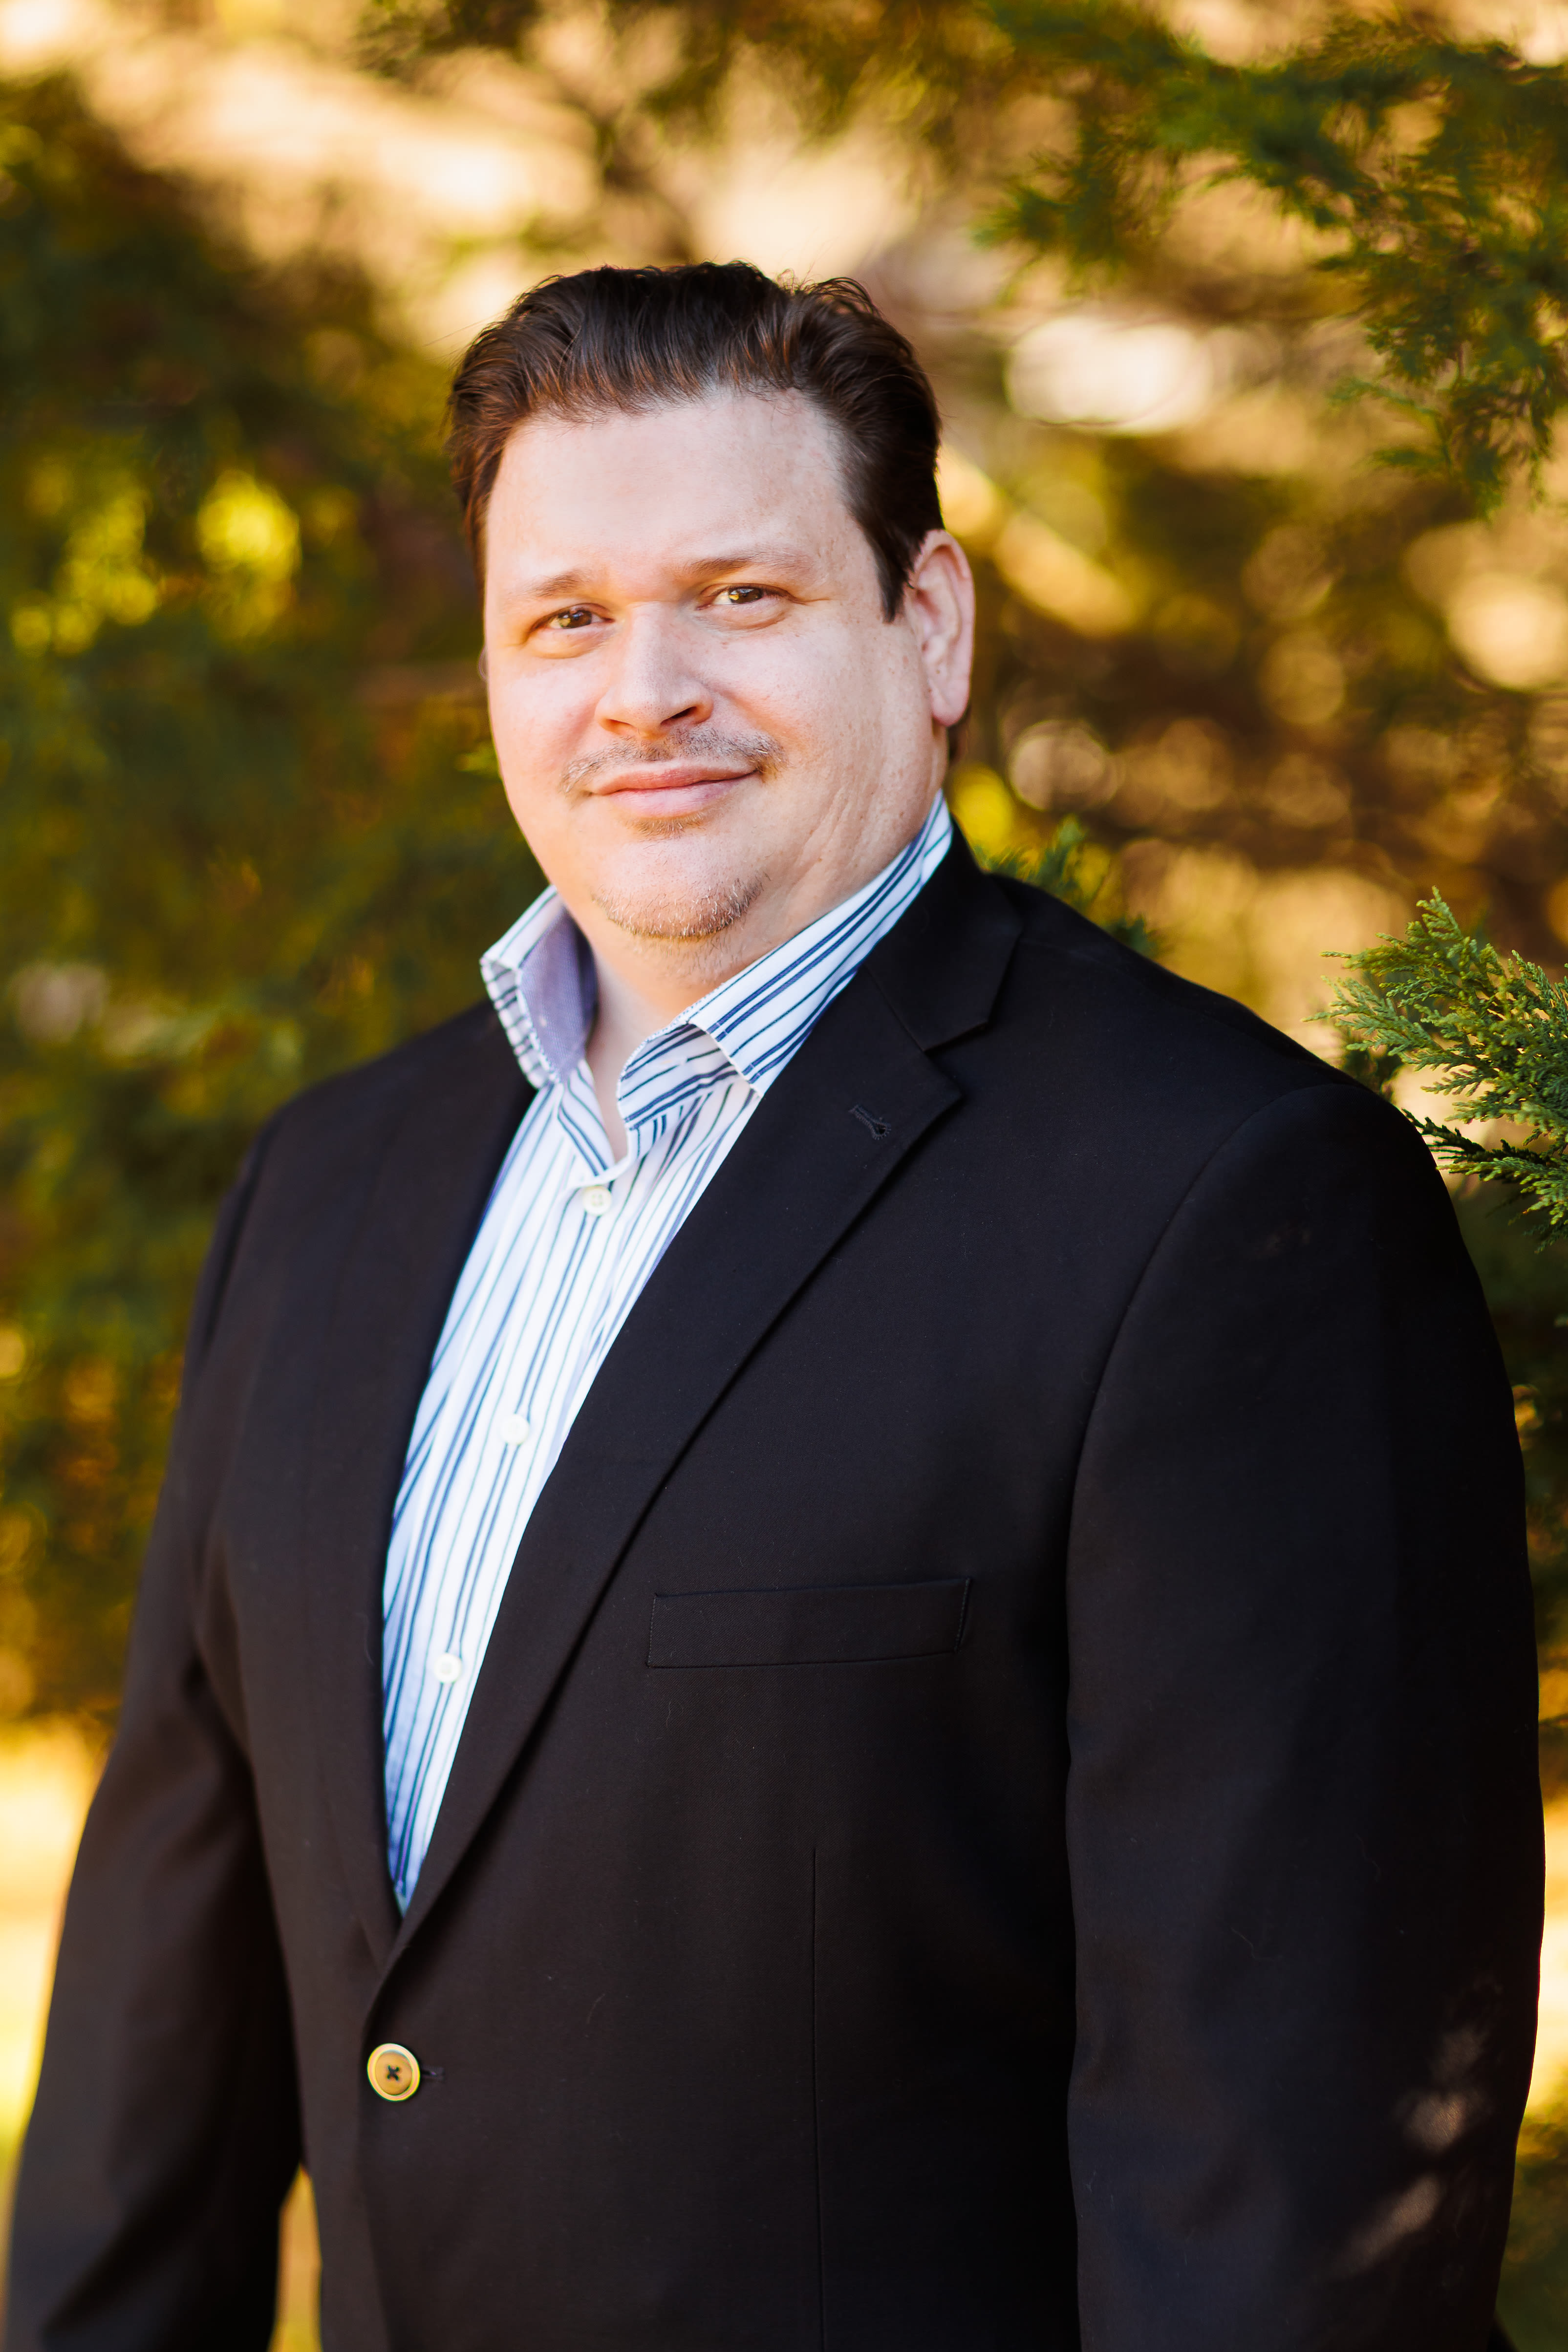 Lee Miller, Director of Marketing for S&S Property Management in Nashville, Tennessee